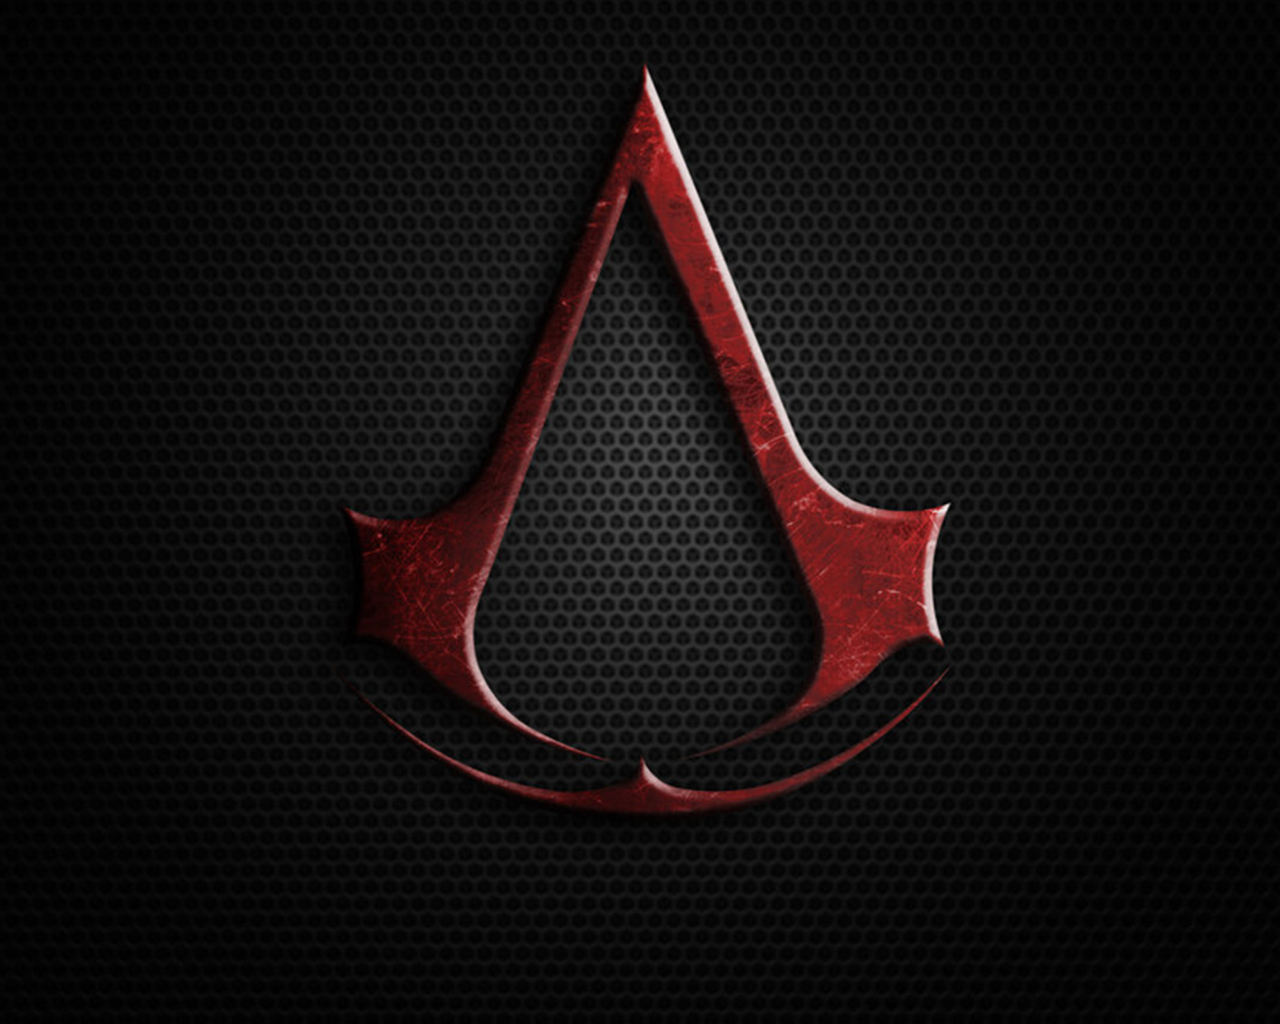 Assassins Creed wallpaper 1280x1024